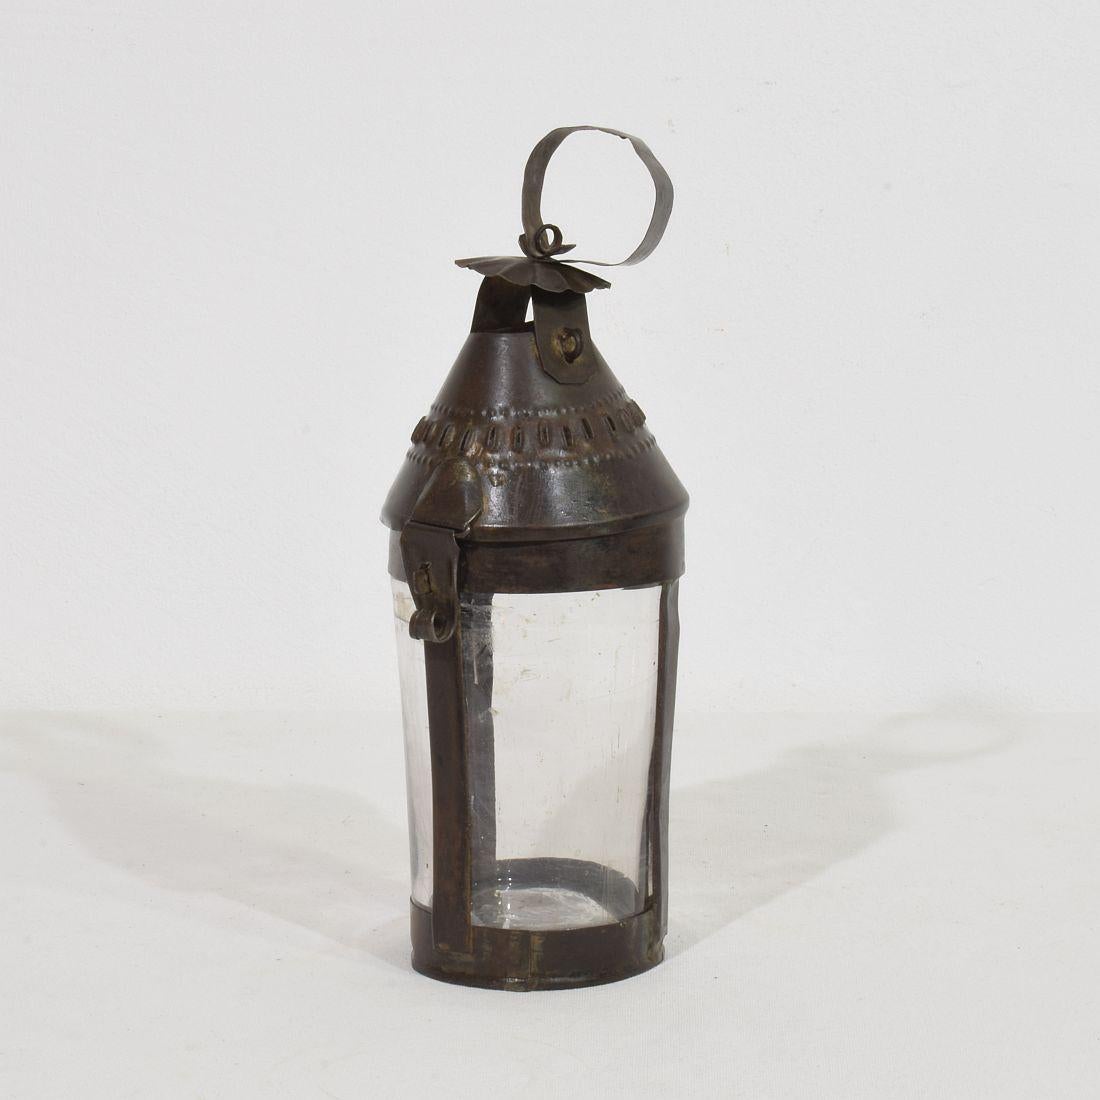 Very rare small folk art lantern. Its design is wonderful due to its simplicity, France, circa 1800-1850.

Beautiful weathered.
